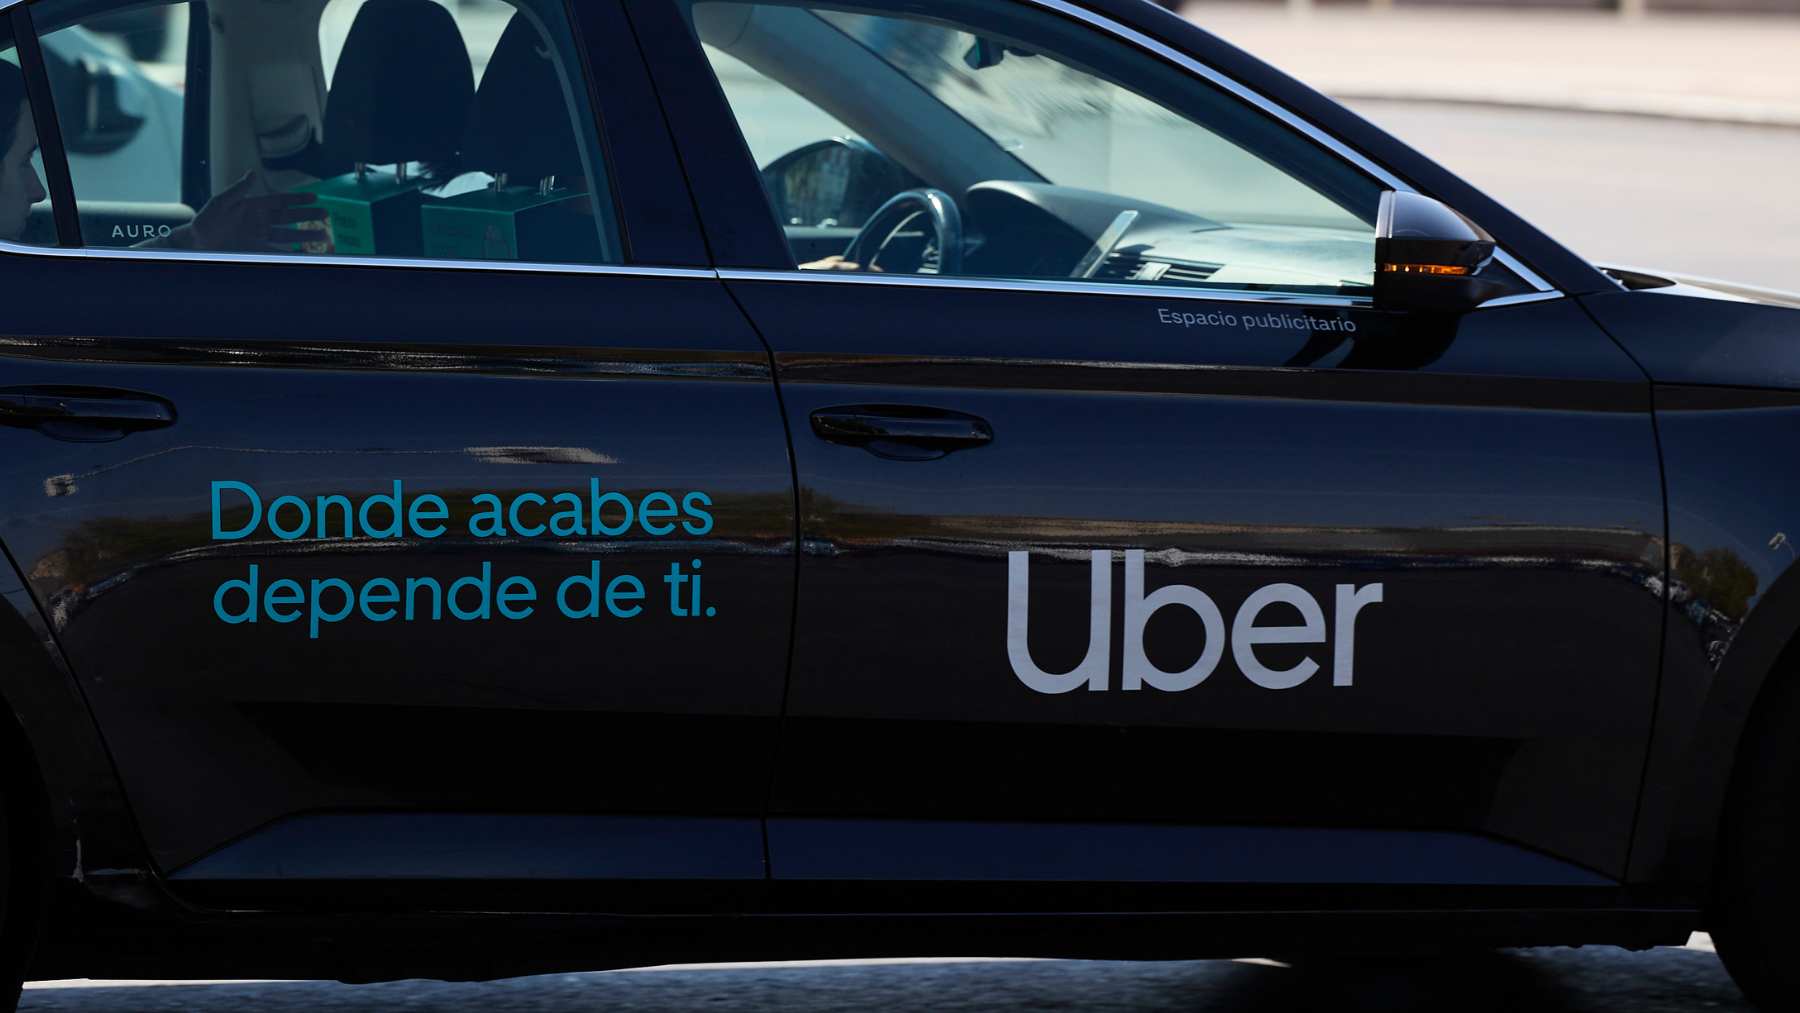 Un coche de Uber. Foto: EP